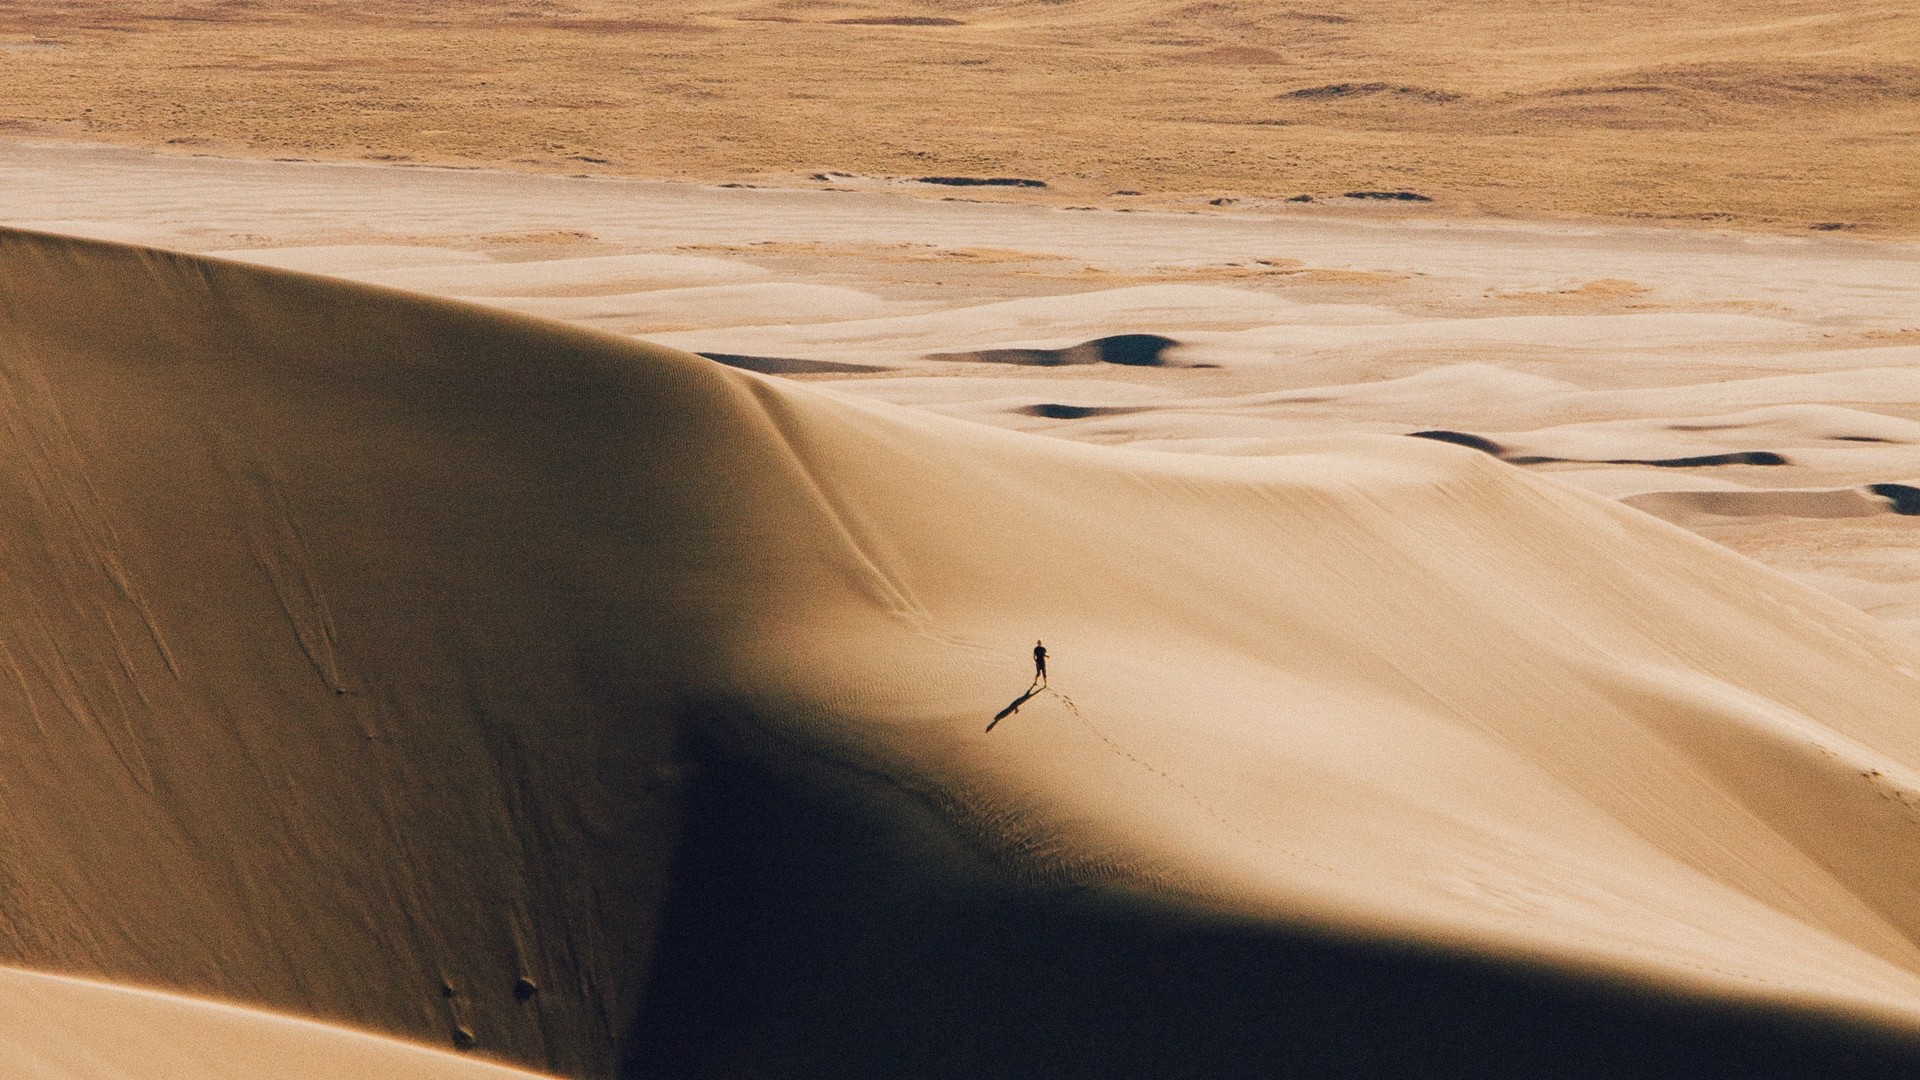 Desert, silhouette, dunes, landform | picture, photo, desktop wallpaper.